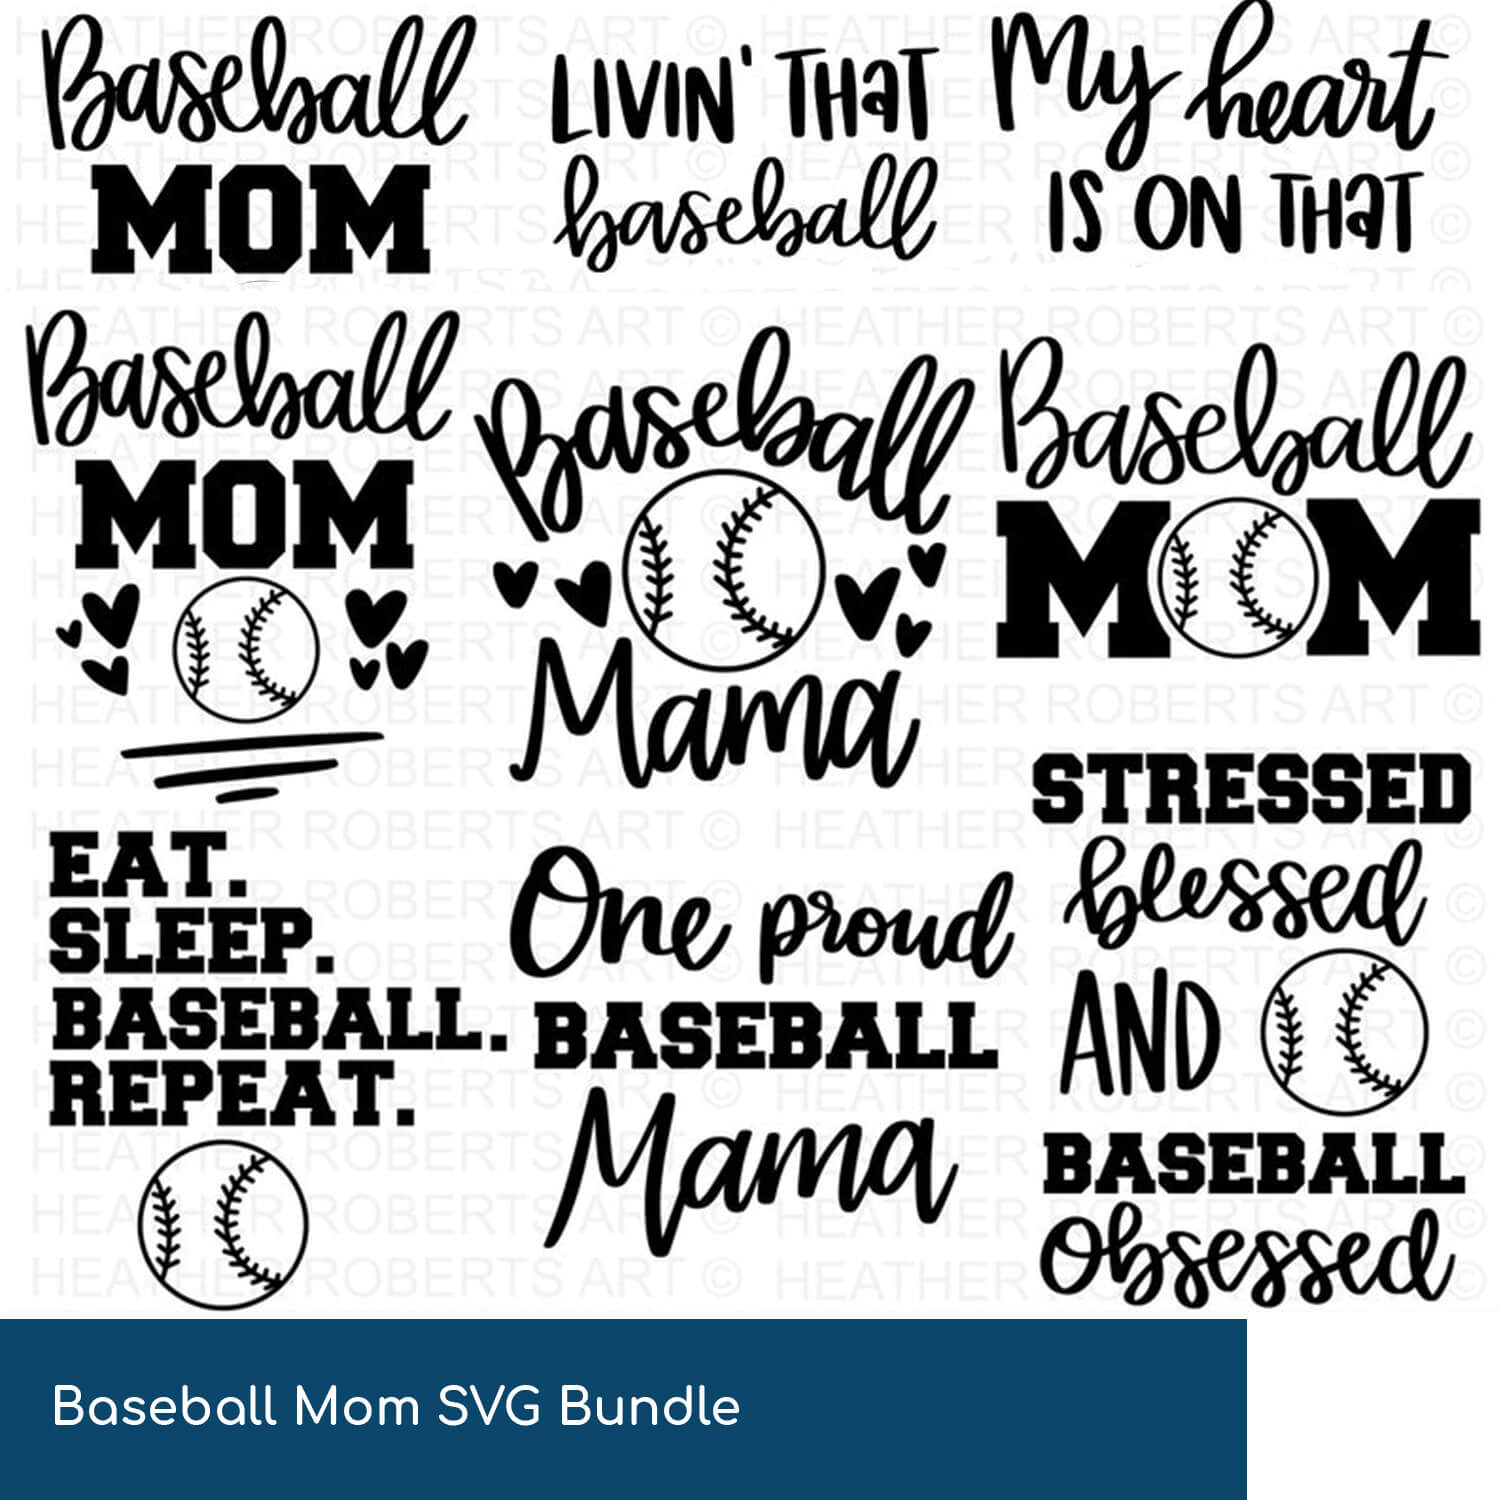 Baseball Mom Life Svg, Livin' That Baseball Mom Life Svg Cut File